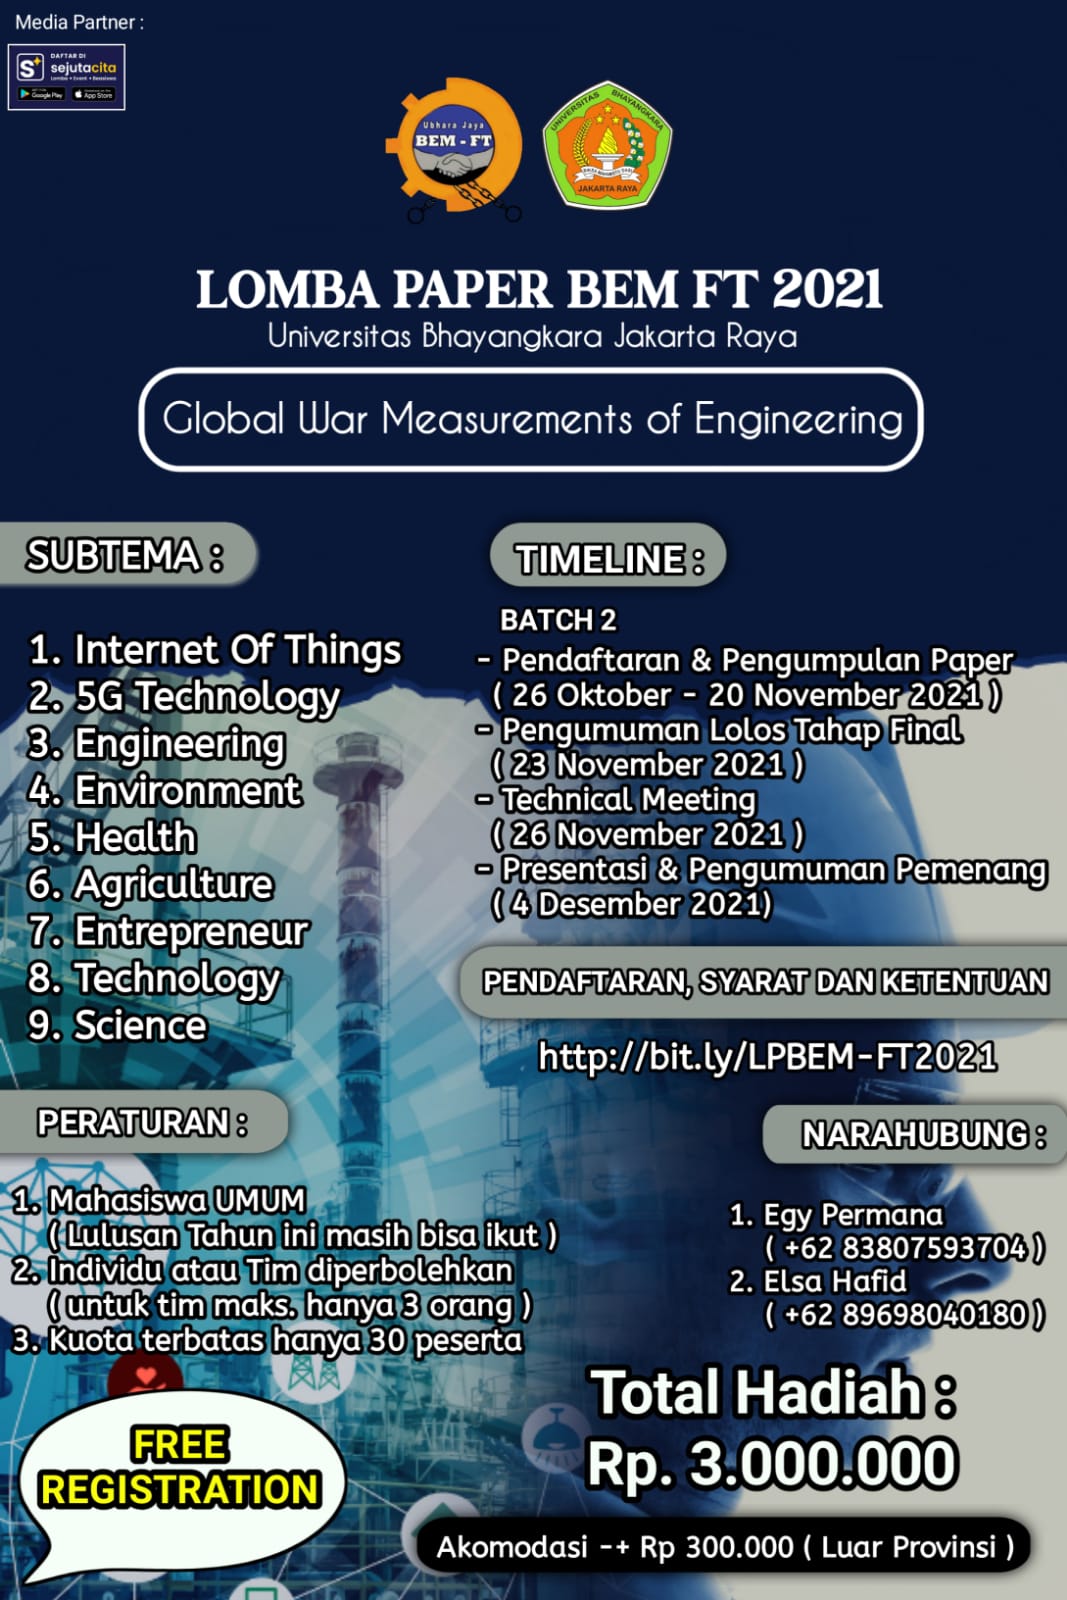 LOMBA PAPER BEM-FT 2021 - Global War Measurements of Engineering (Batch 2)